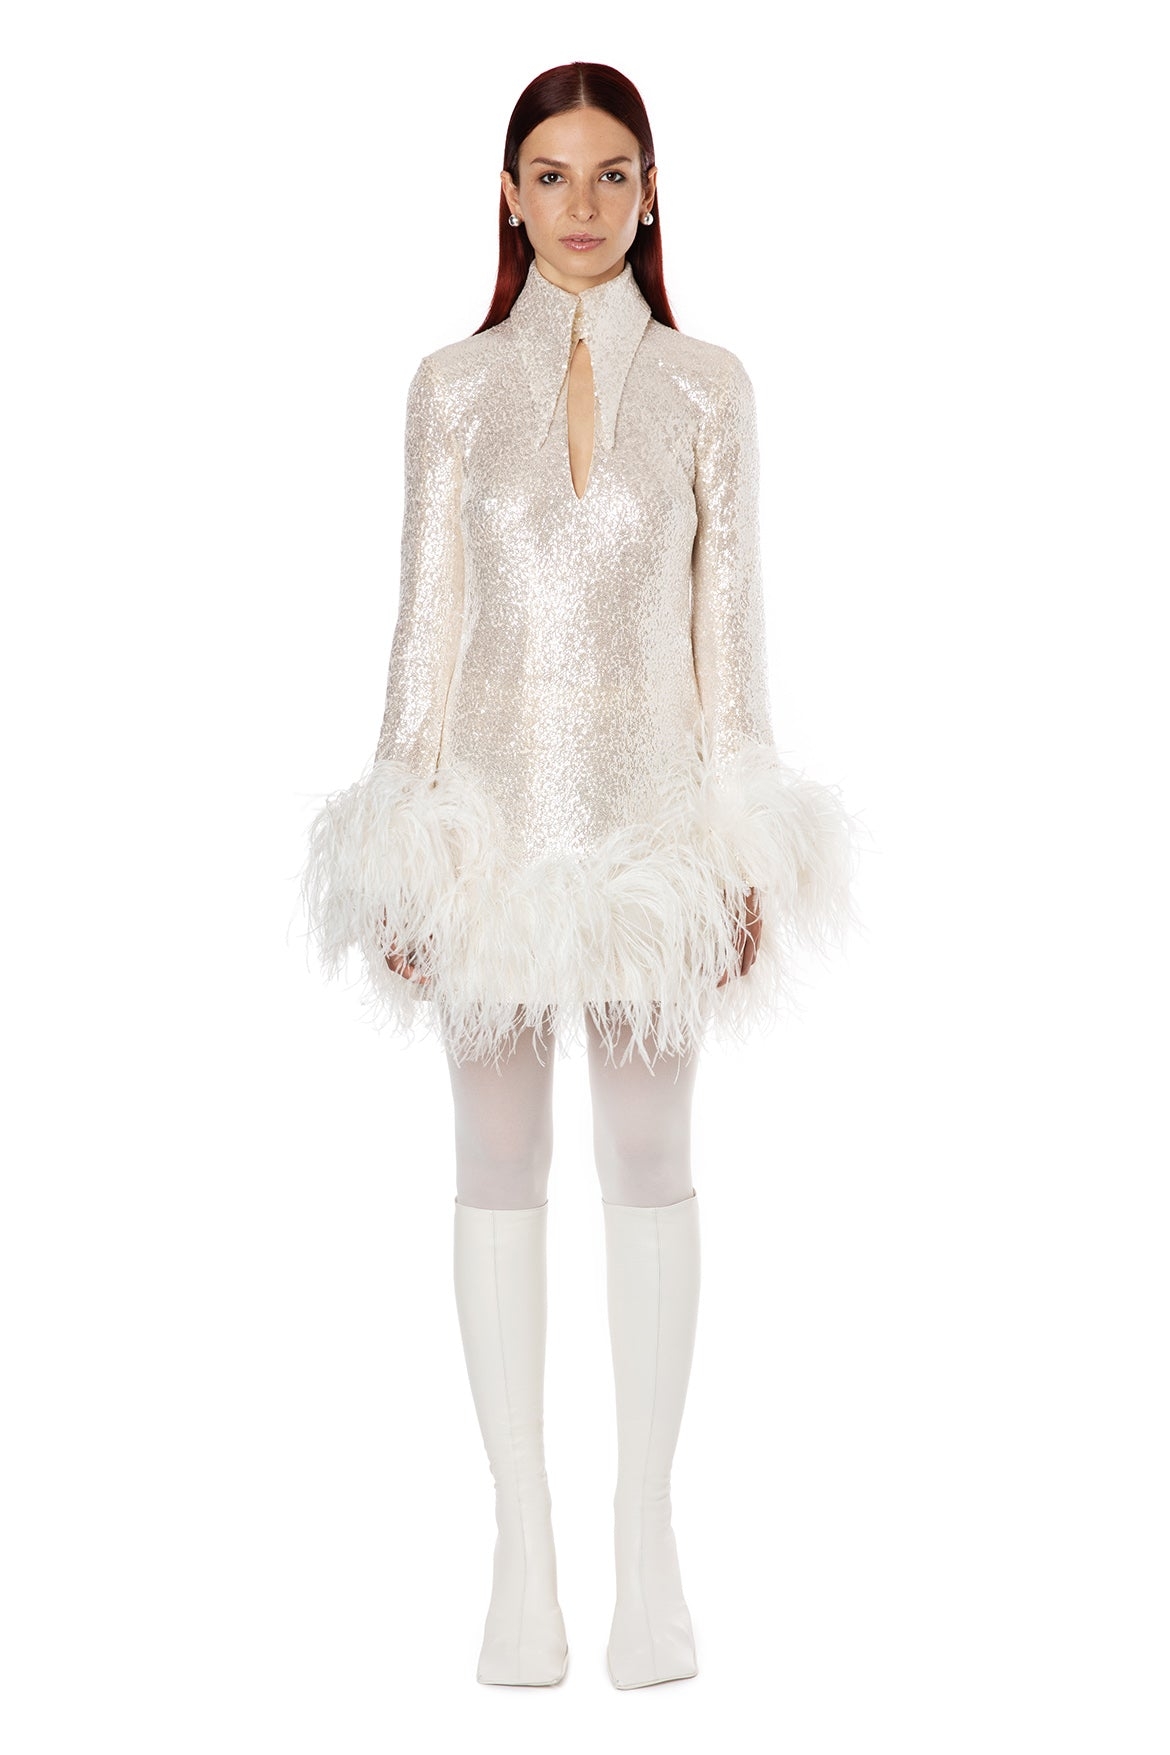 Michelle Sequin Mini Dress, 16 – 16Arlington